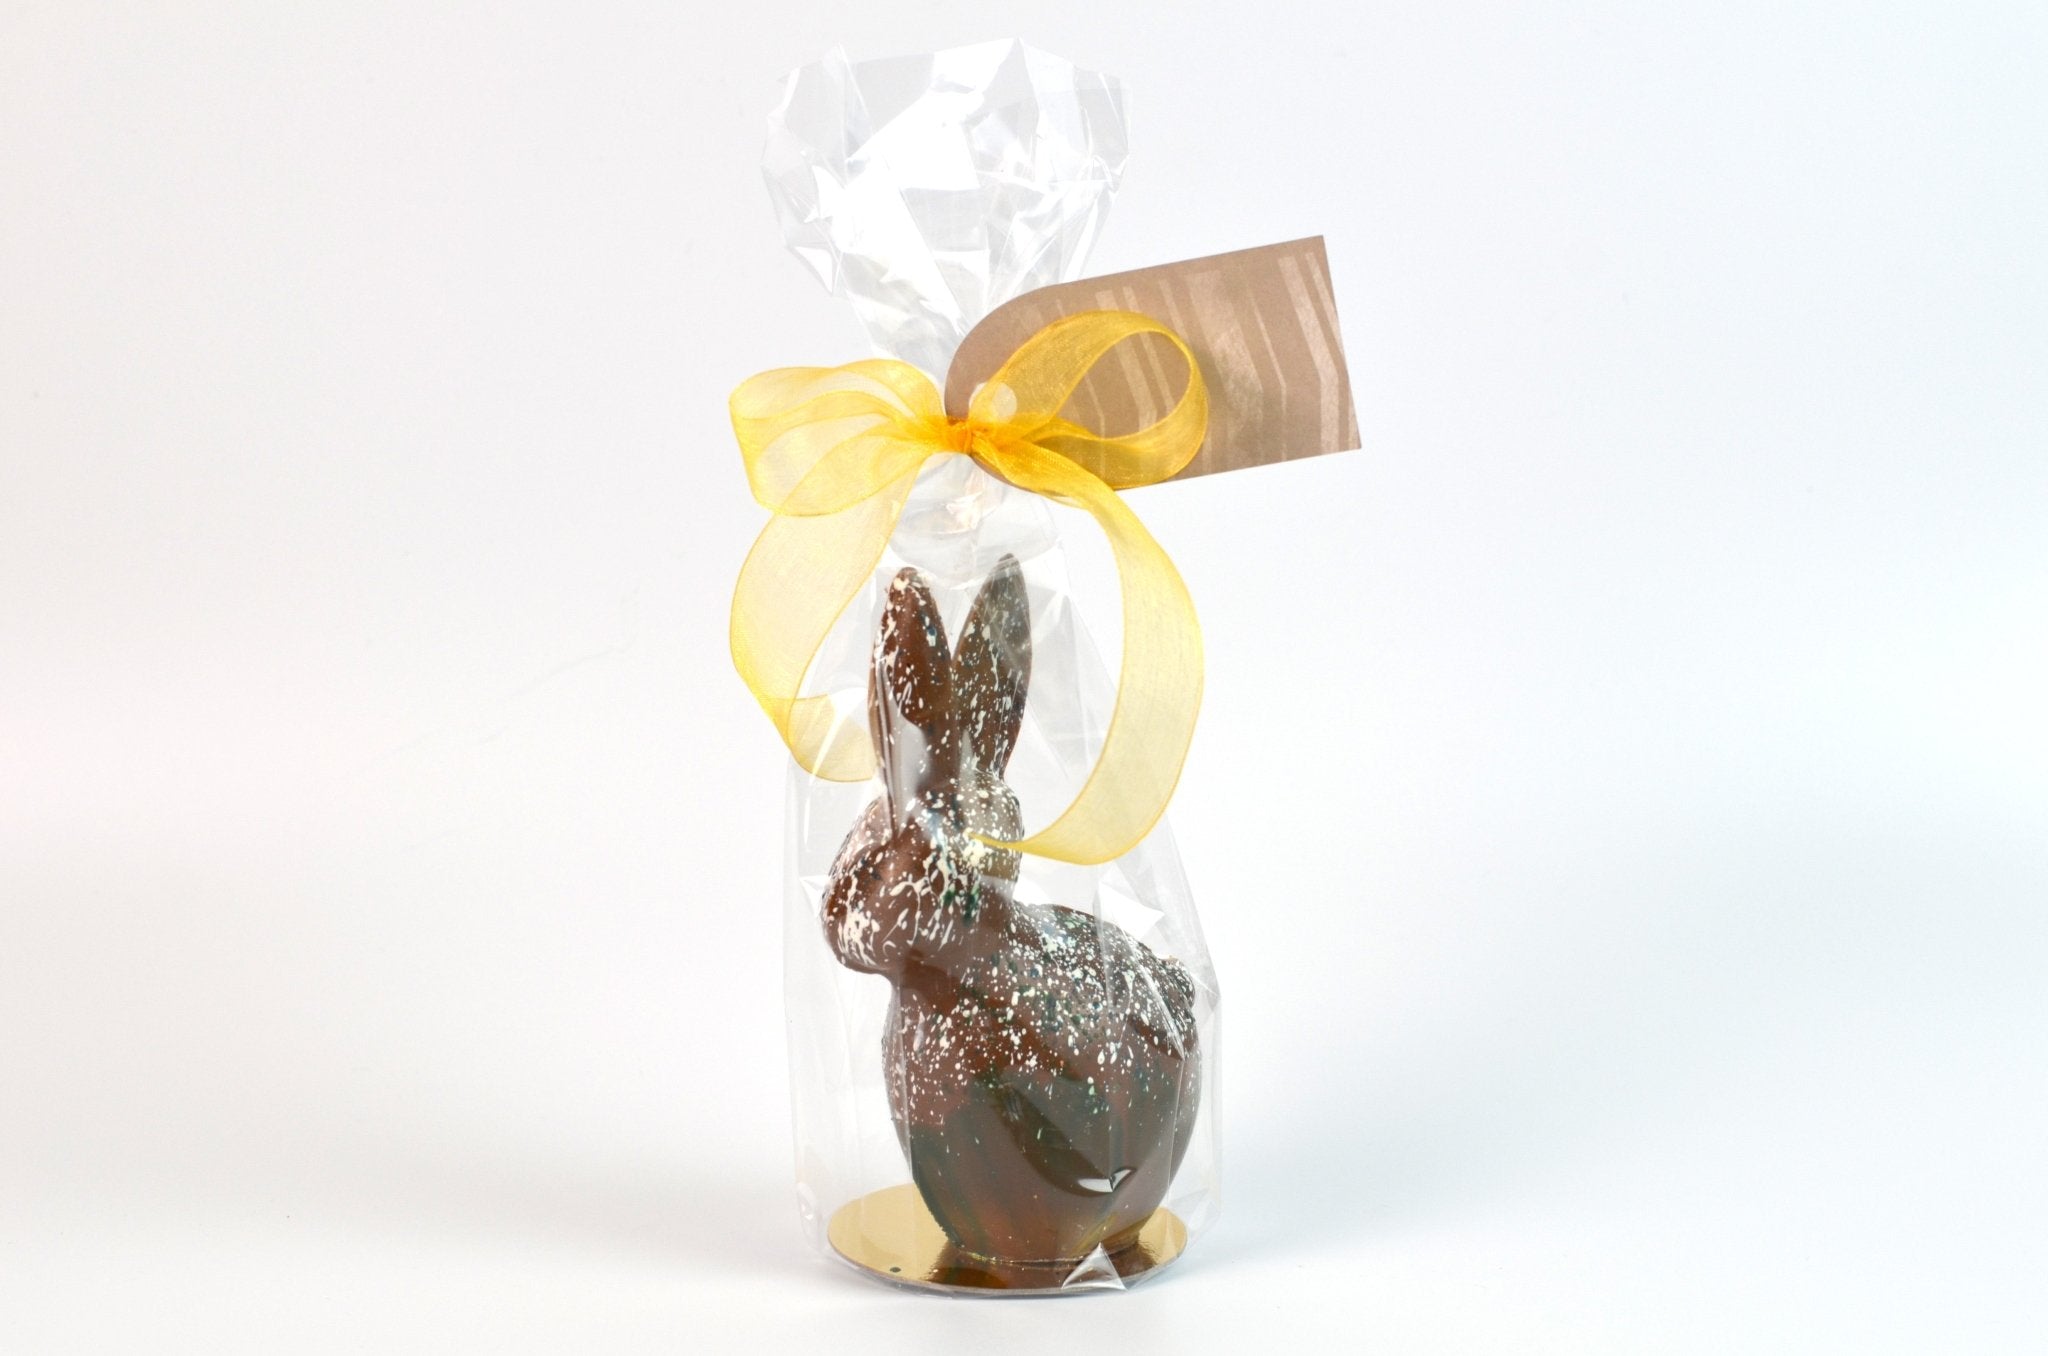 Luxury Gluten-free Easter Chocolate Gifts from Bossa Nova Chocolate